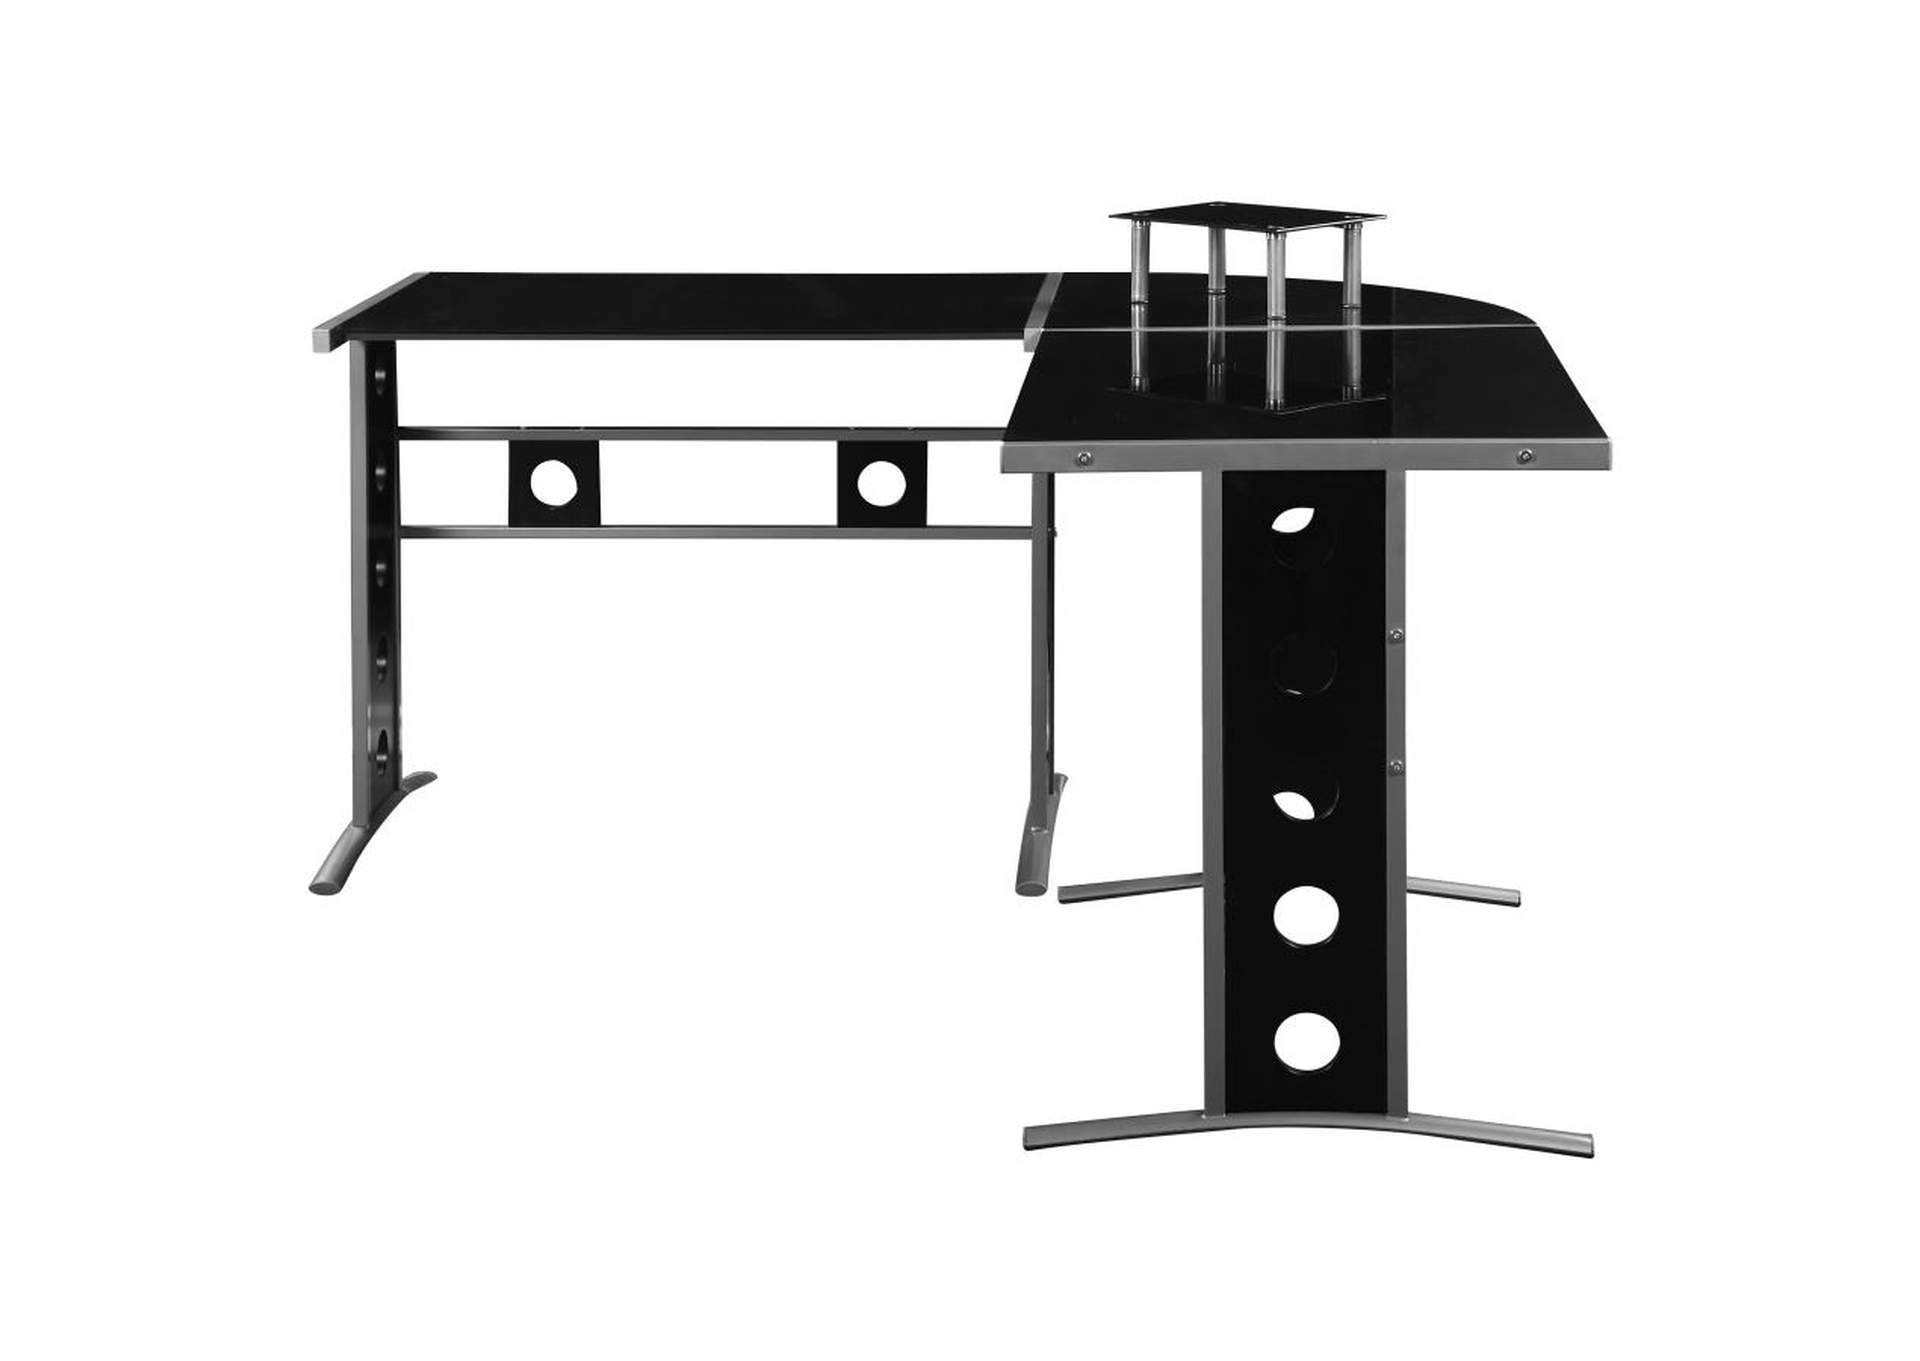 Keizer 3-Piece L-Shape Office Desk Set Black And Silver,Coaster Furniture